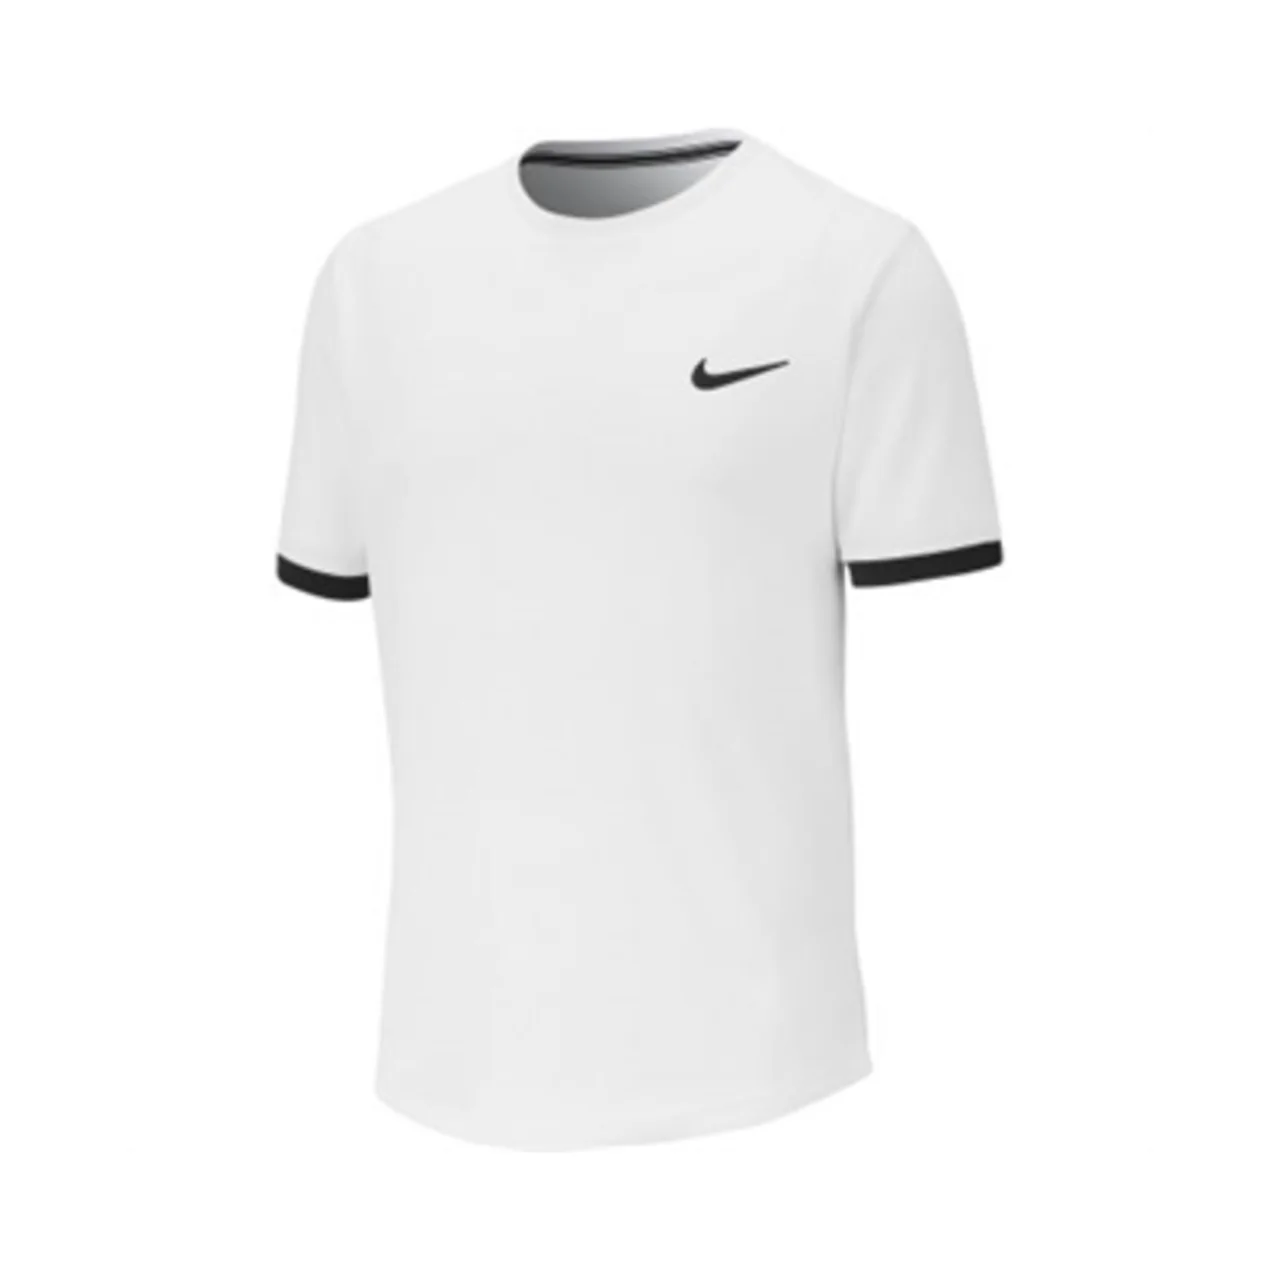 Nike Dry Top Boy White/Black